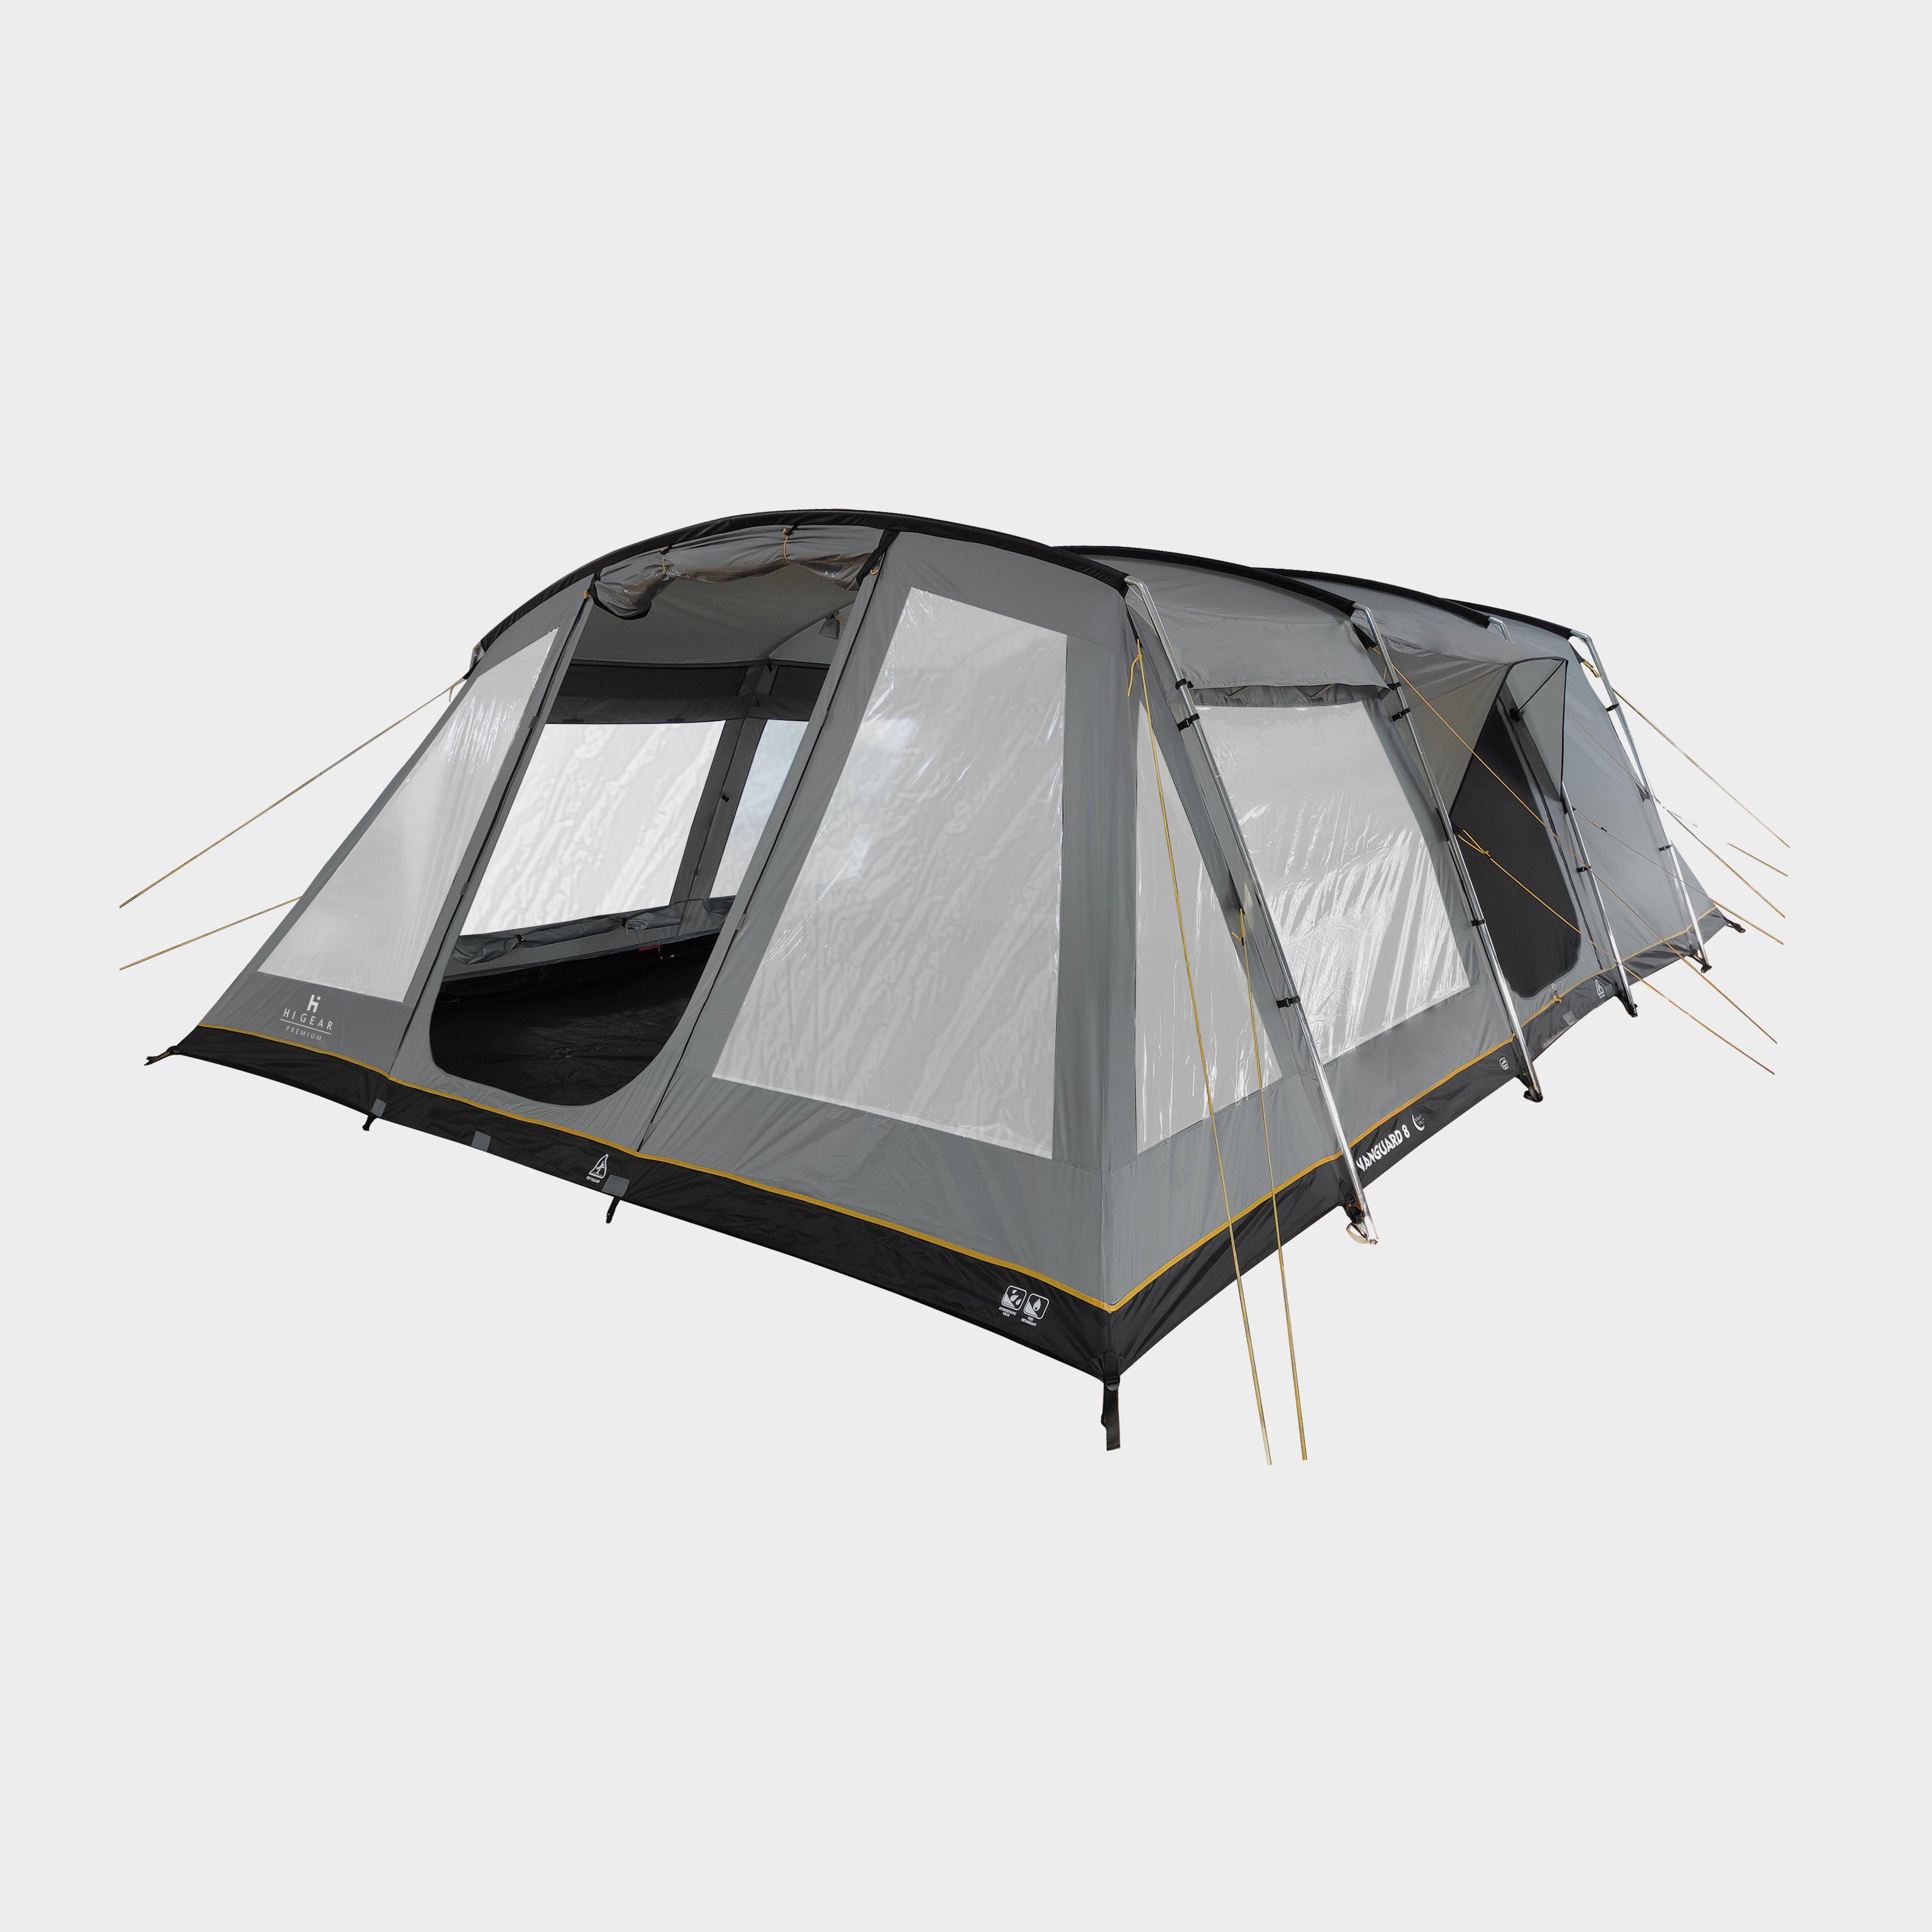  HI-GEAR Vanguard Nightfall 8 Tent, Grey